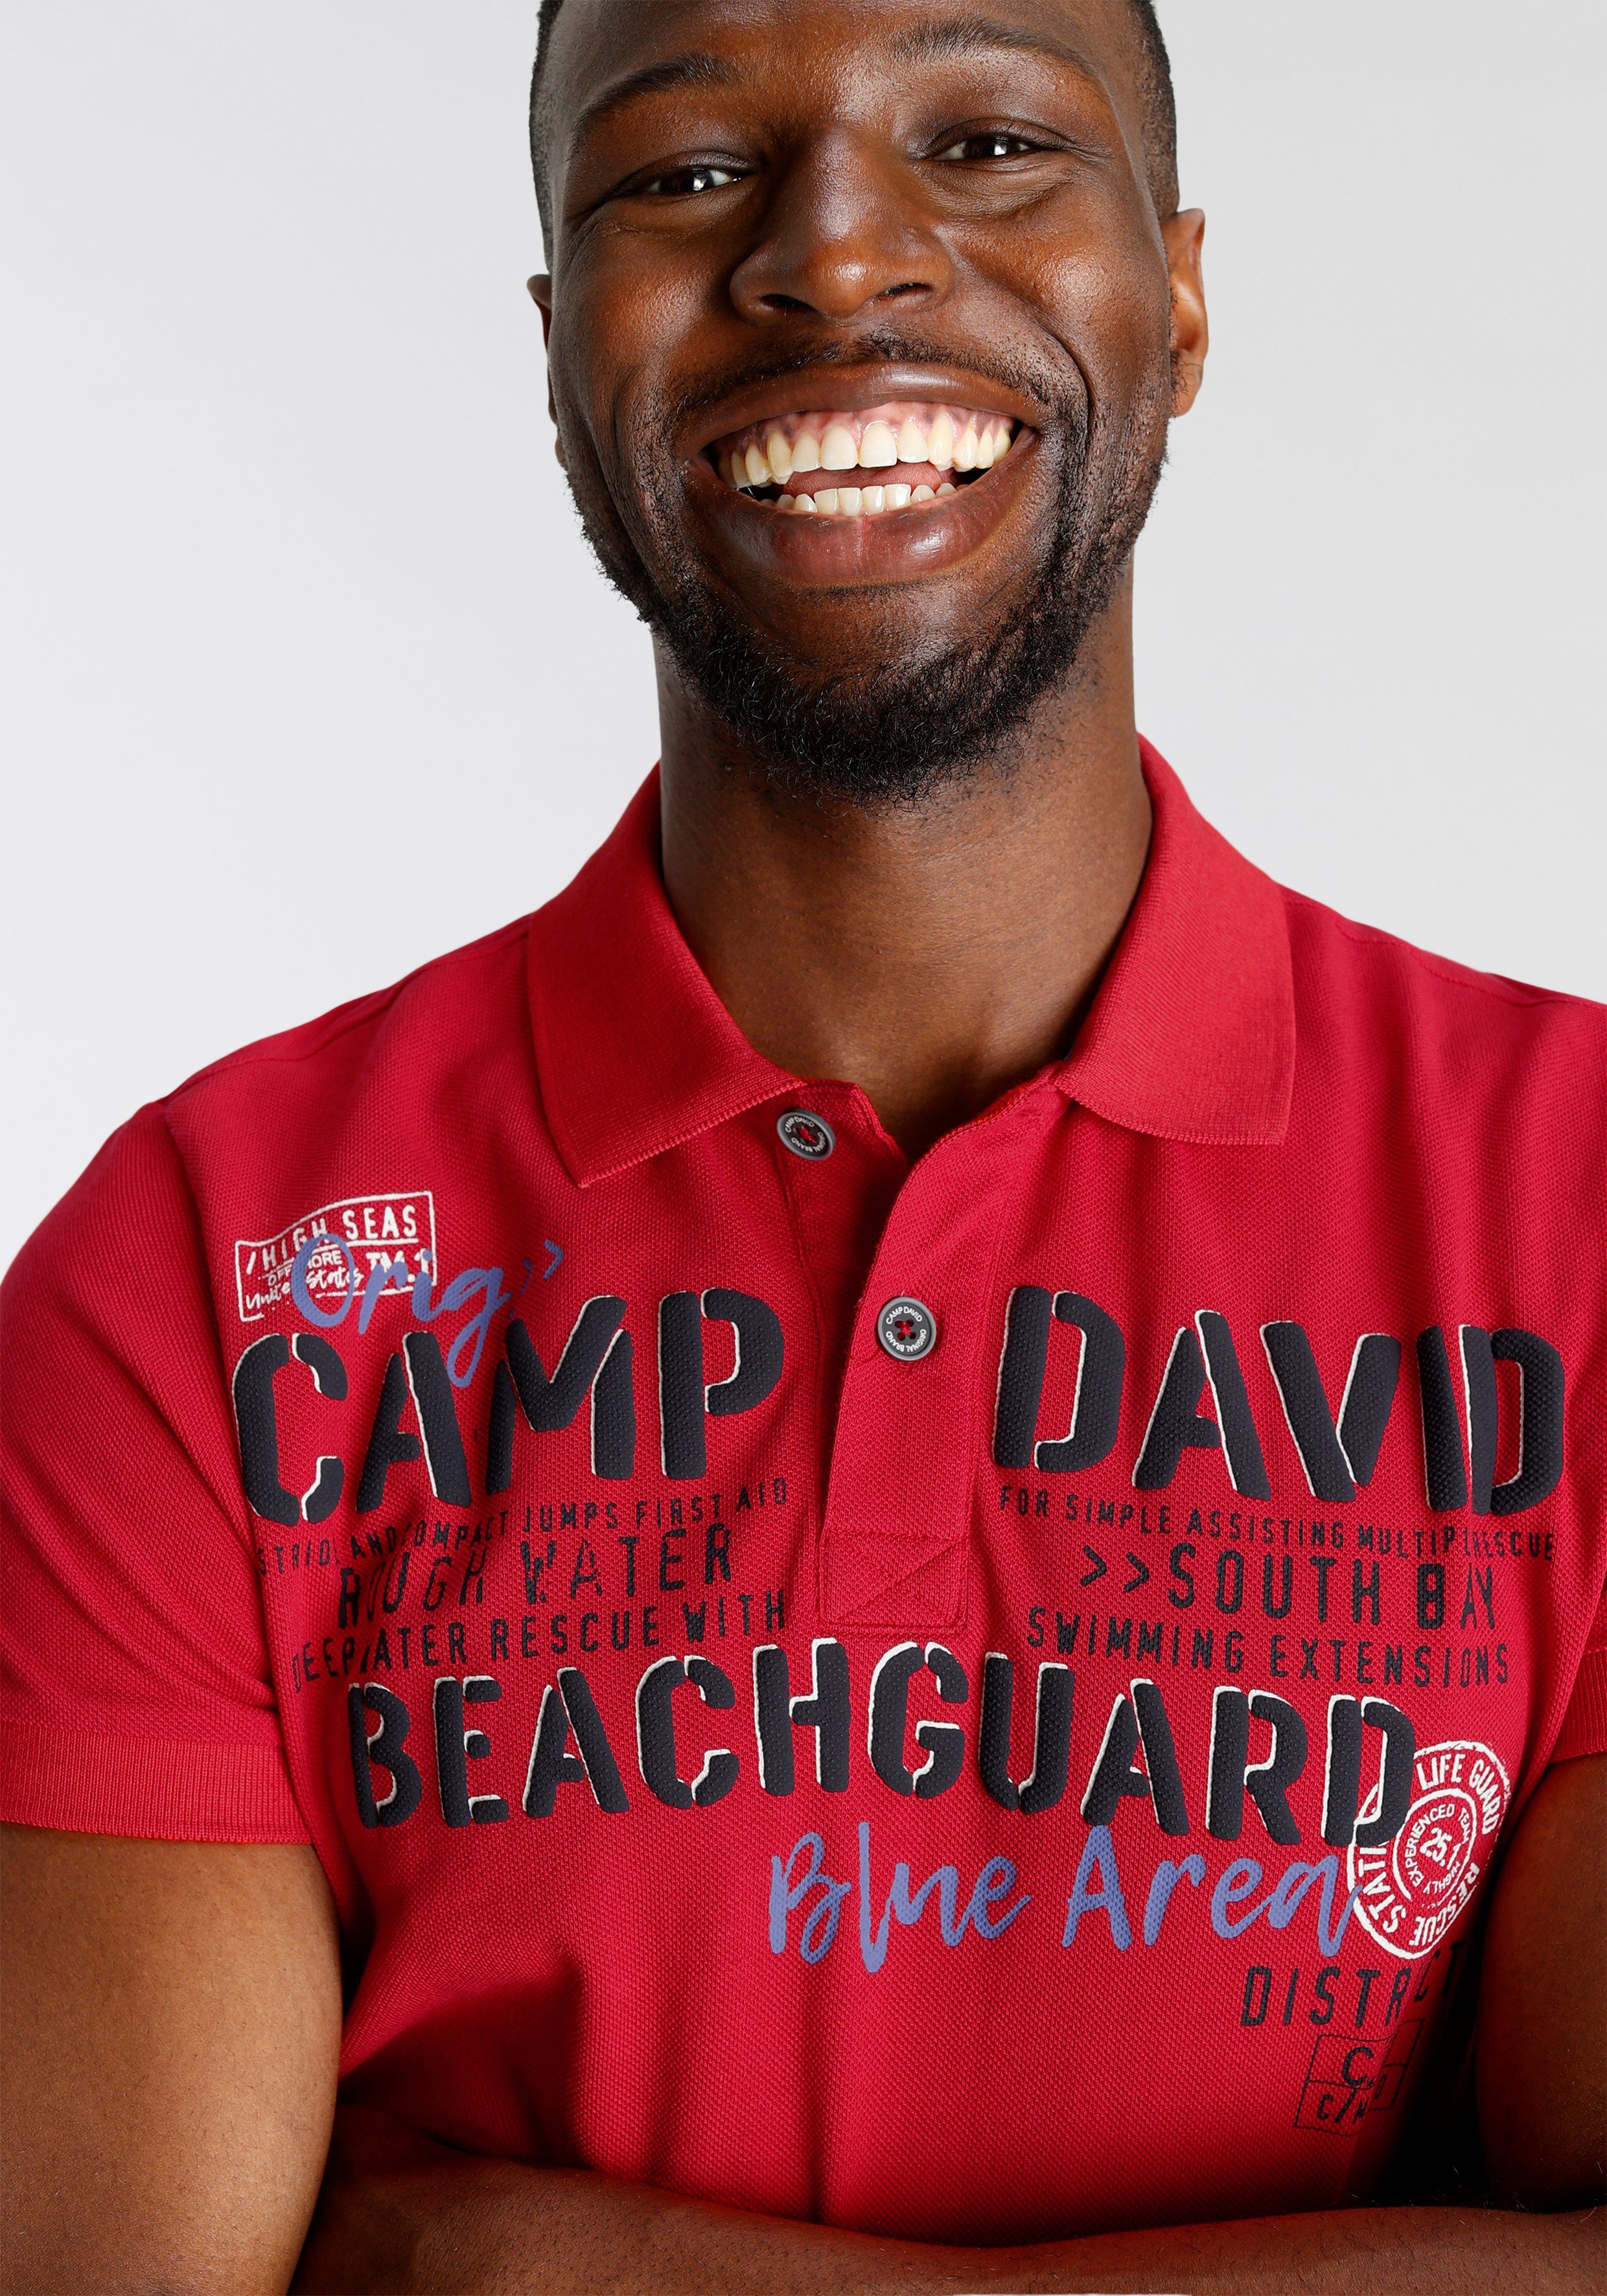 in red Poloshirt hochwertiger Piqué-Qualität DAVID sun CAMP